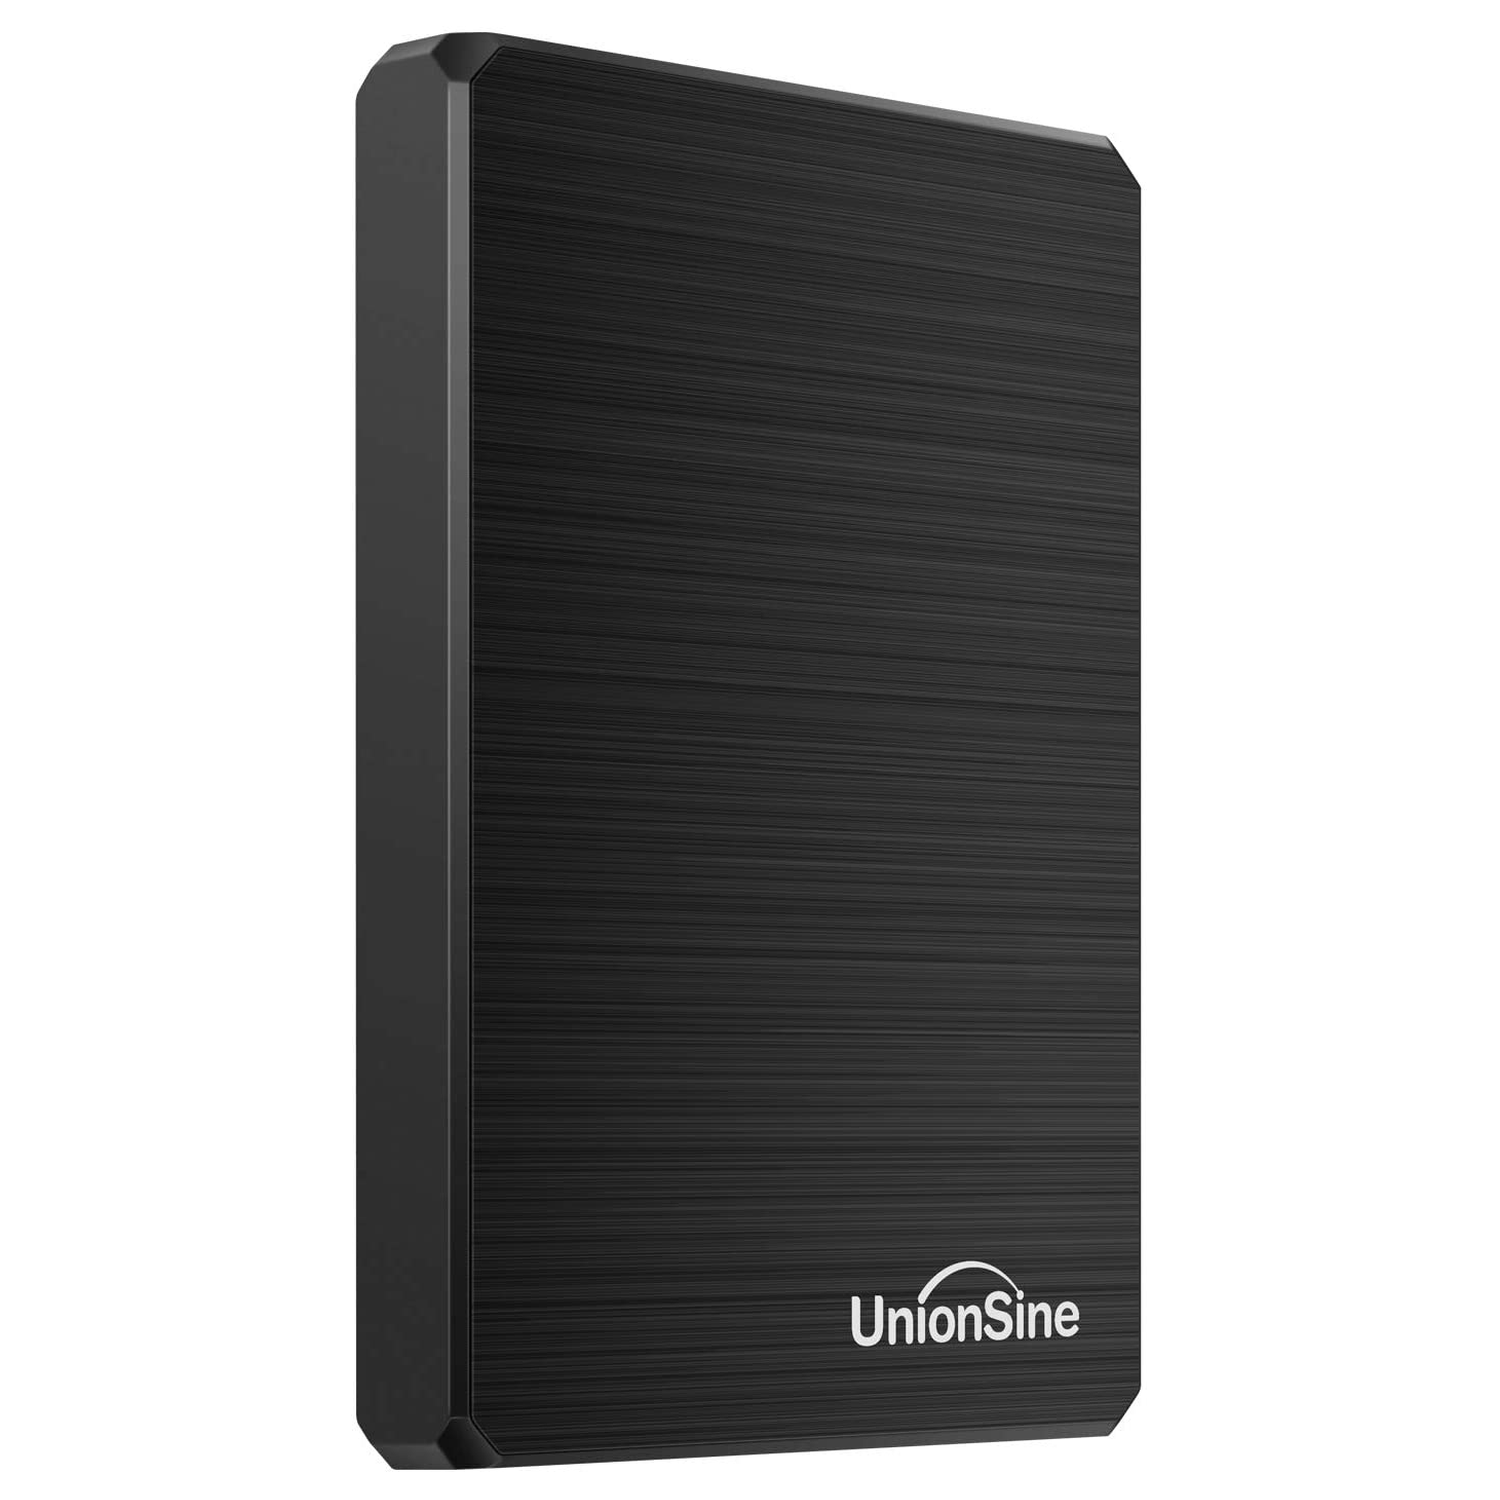 Unionsine 1TB Ultra Slim Portable External Hard Drive USB3.0 HDD Storage Compatible for PC, Desktop, Laptop, Xbox One,..